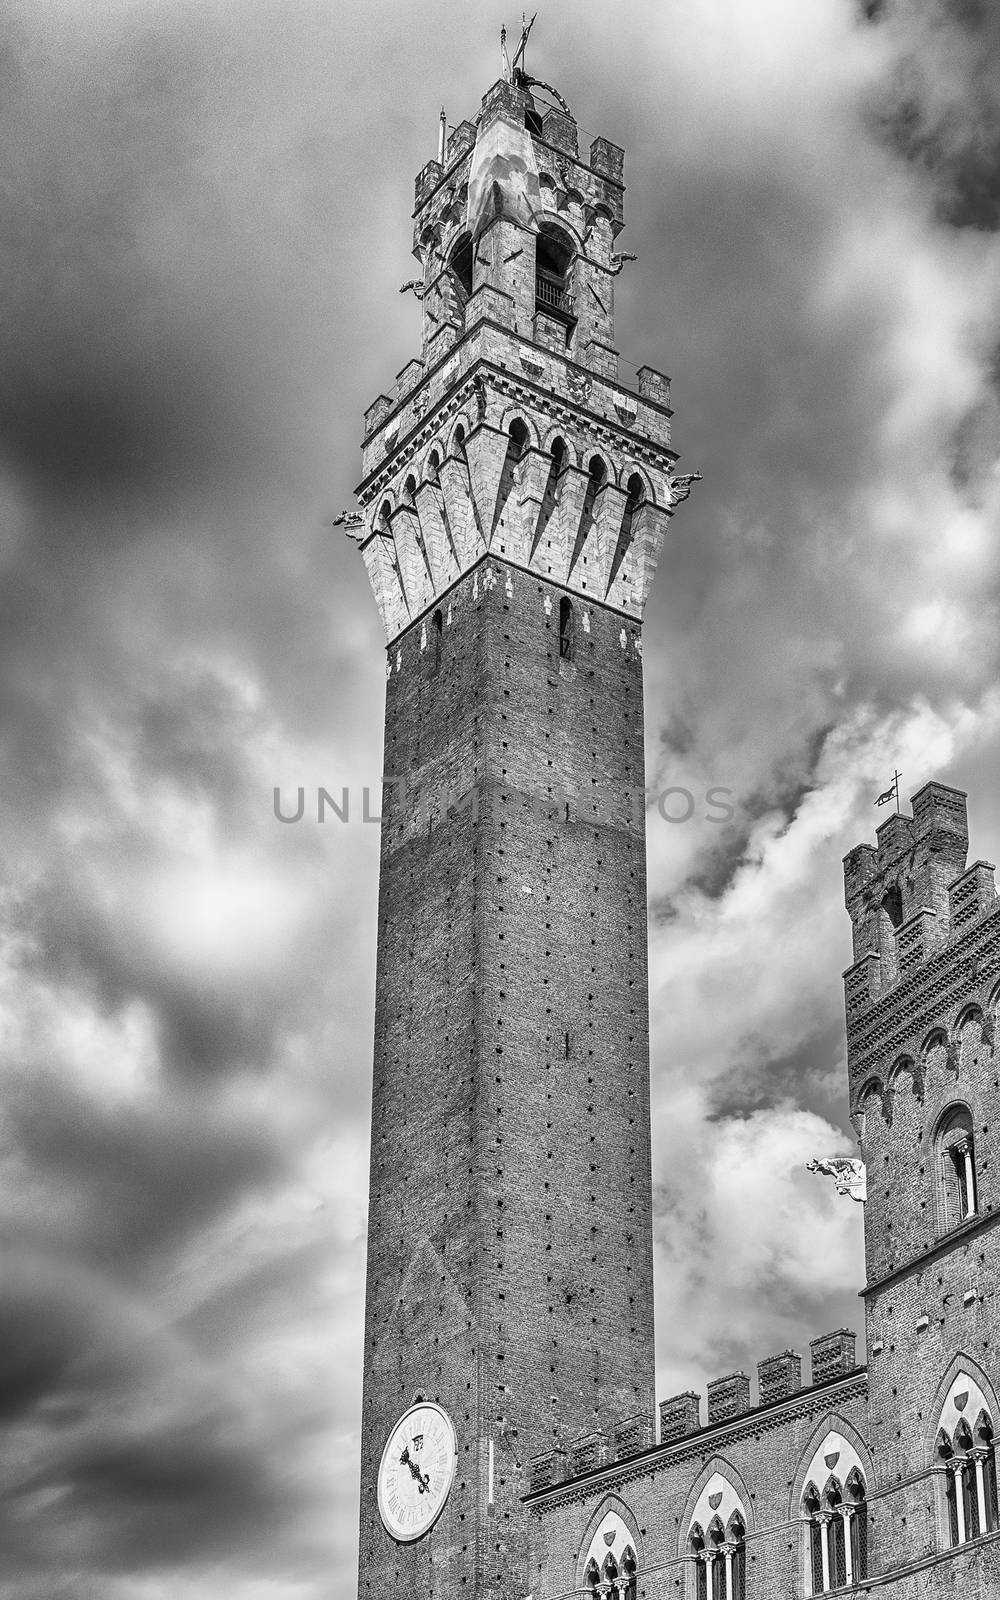 View of Torre del Mangia, iconic landmark of Siena, Italy by marcorubino